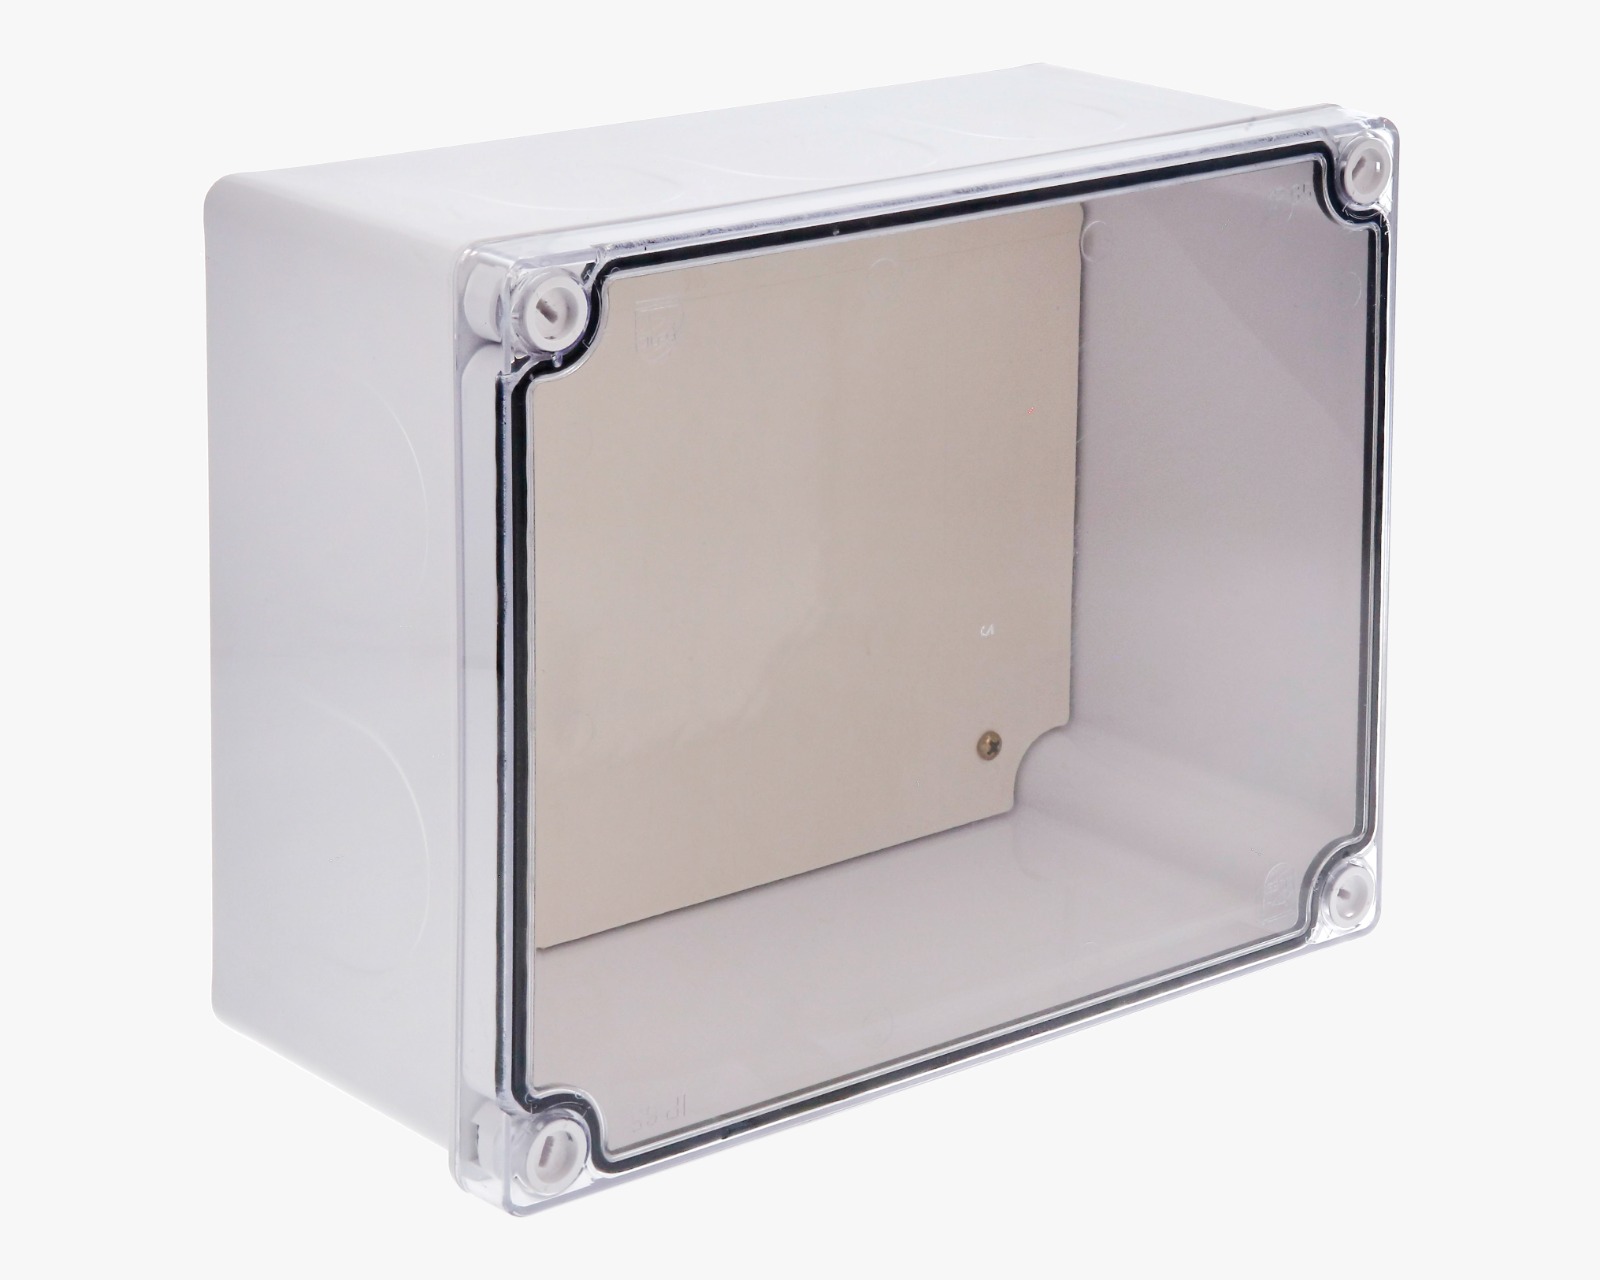 Caja hermética con tapa transparente 17×22 cm